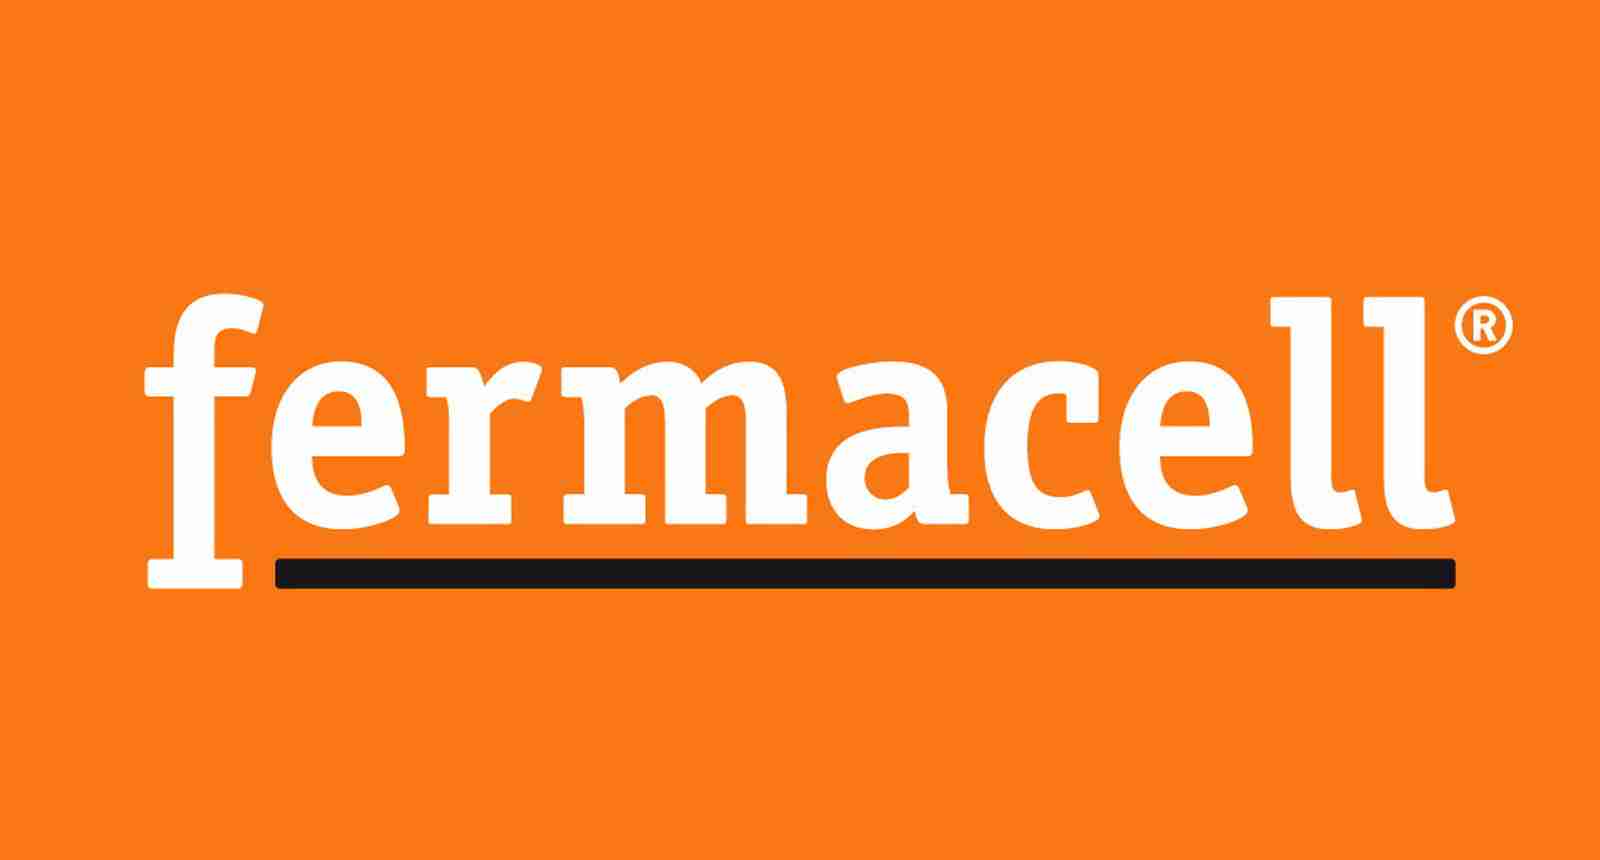 Logo de la marque Fermacell